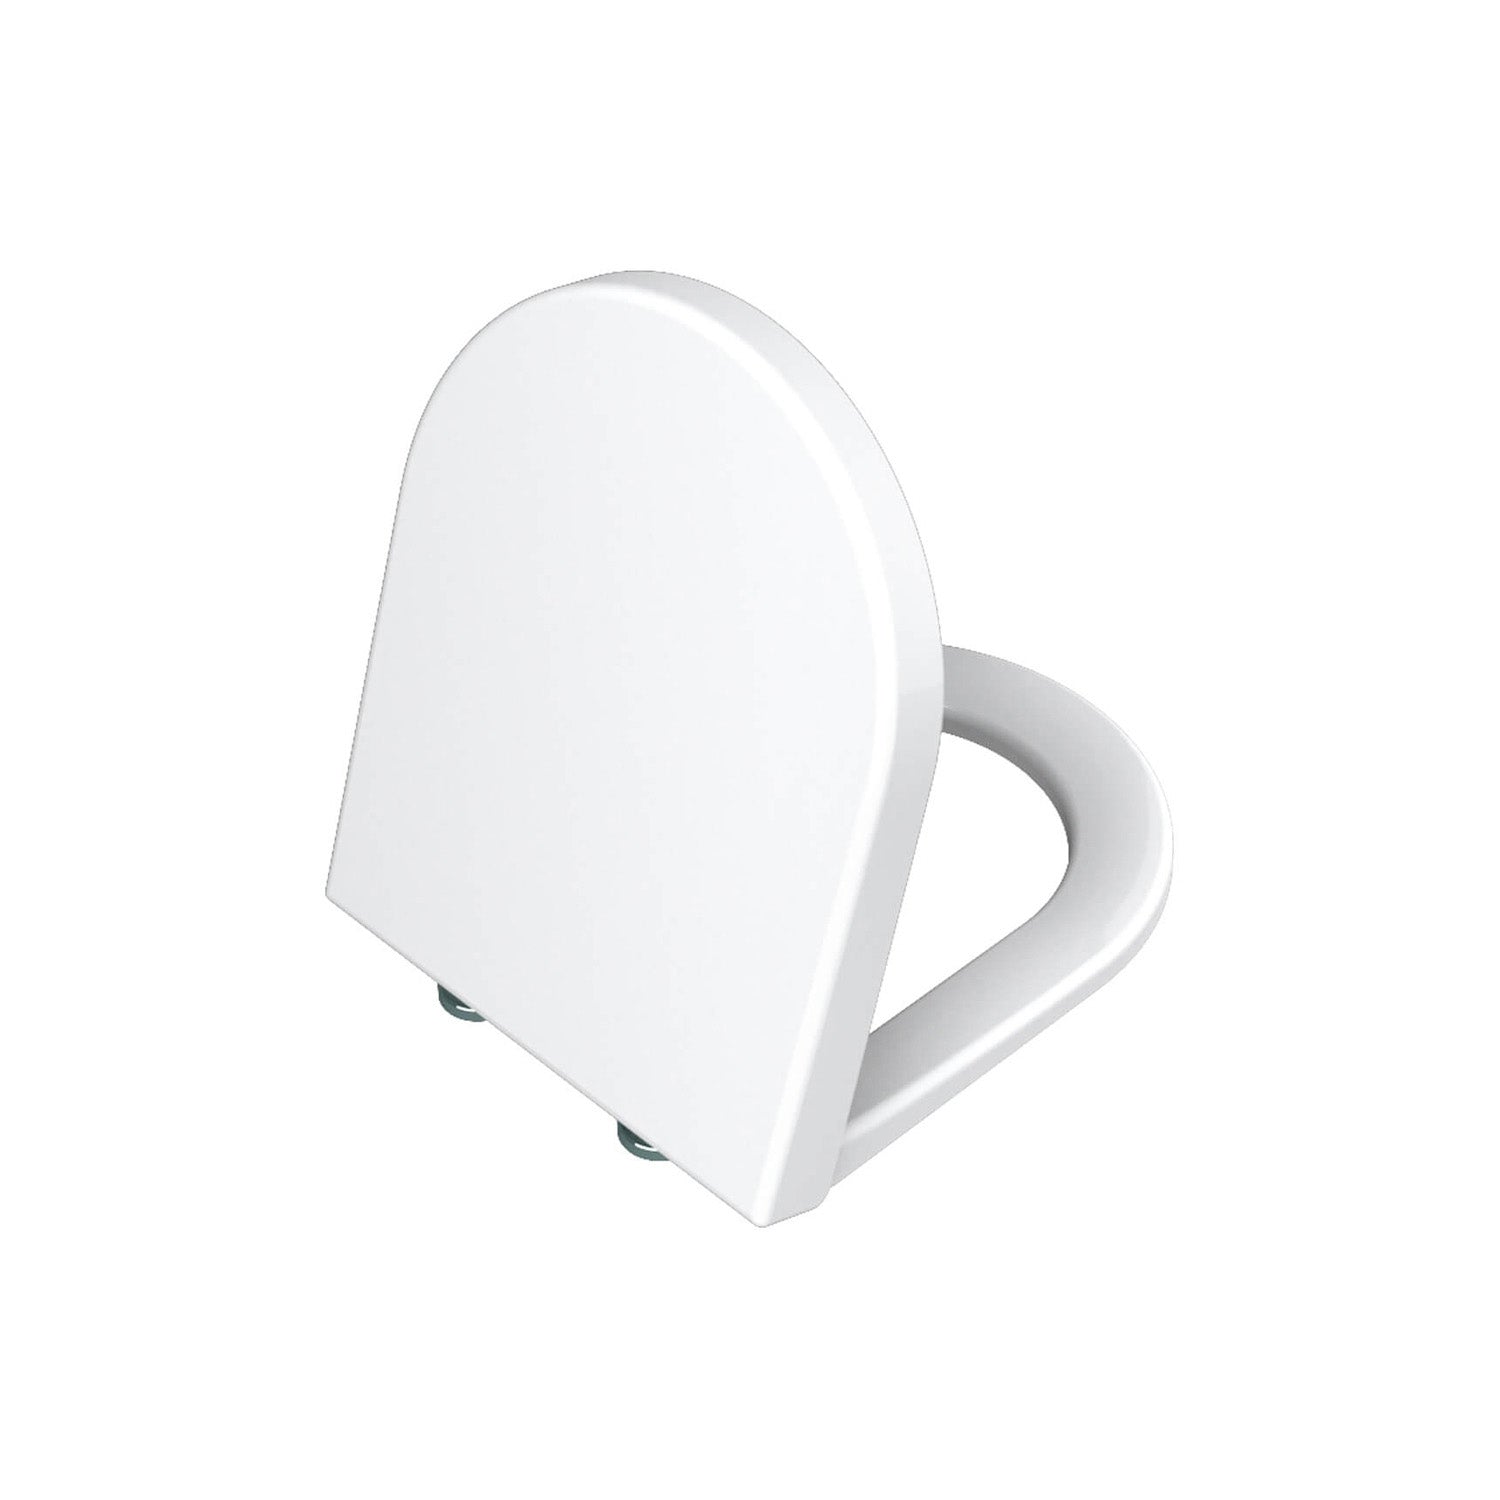 Vesta toilet seat ring on a white background